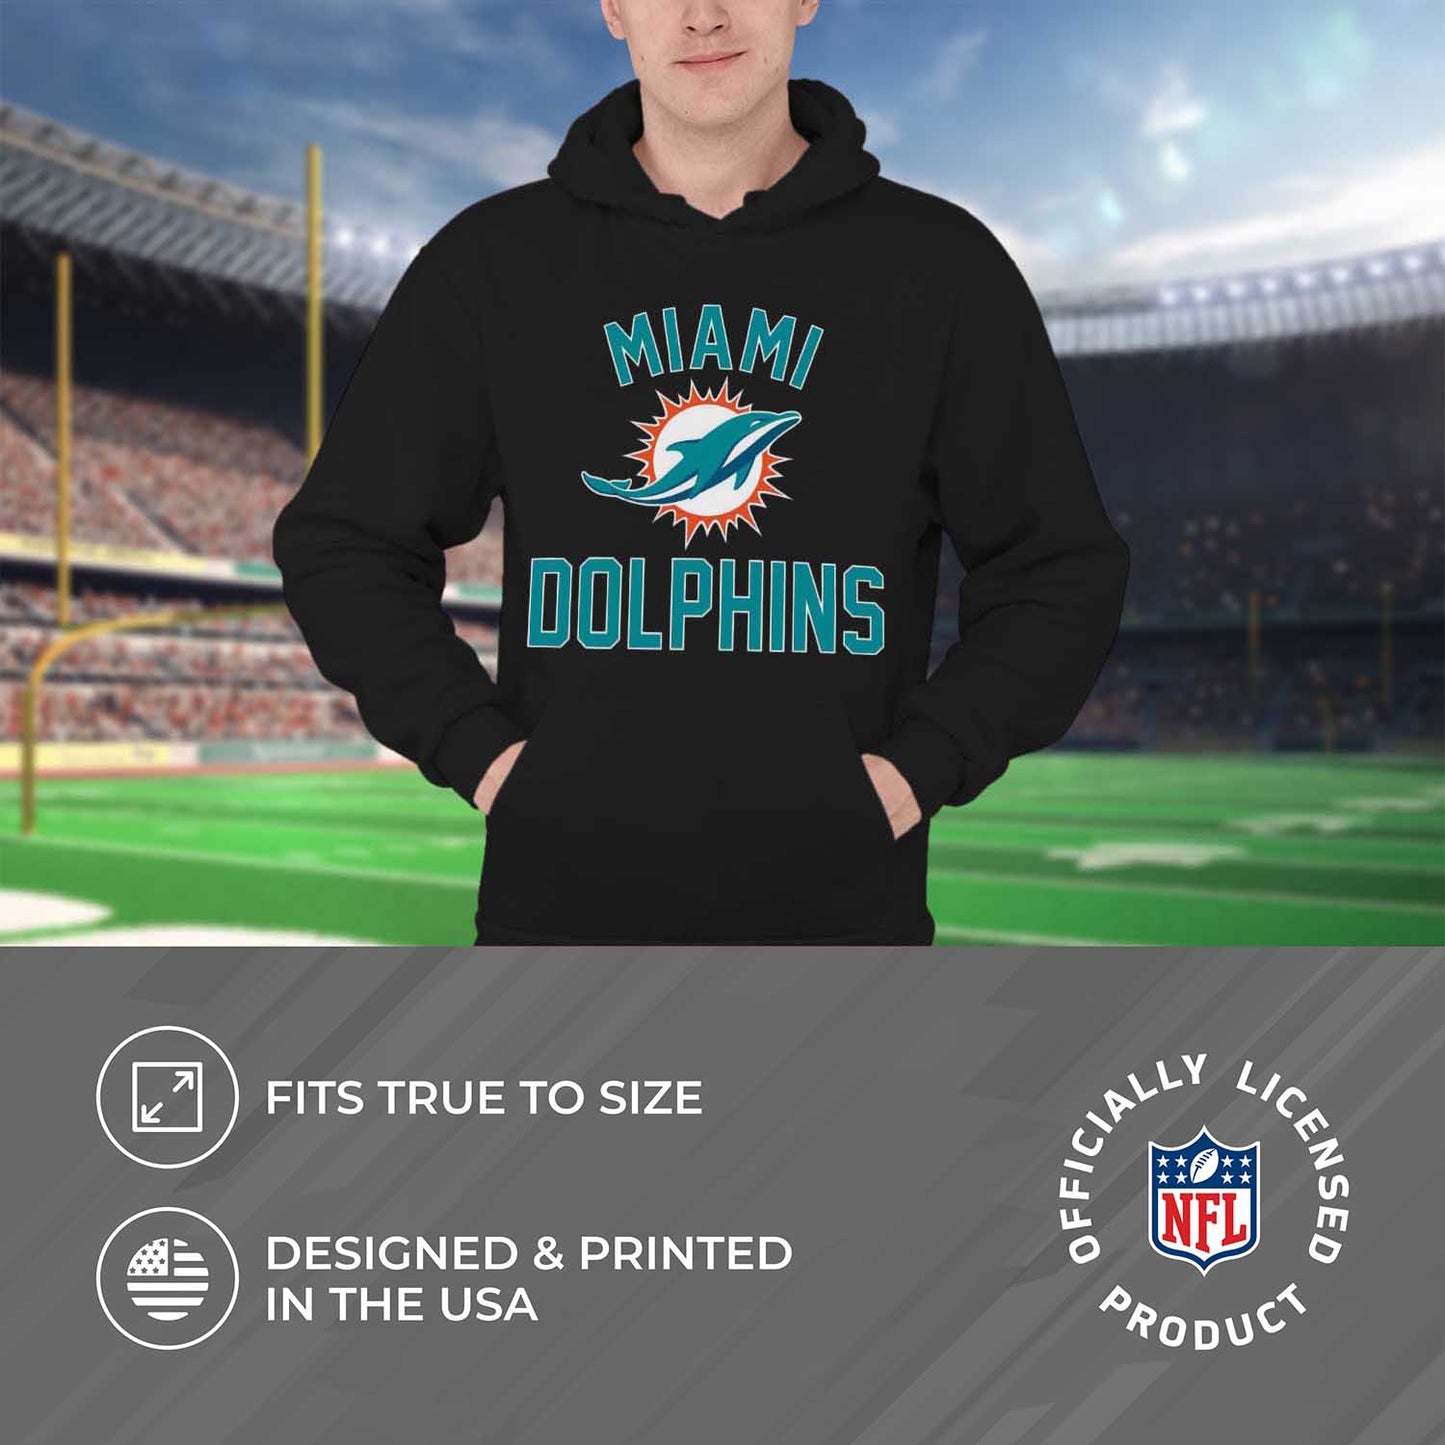 Miami Dolphins NFL Adult Gameday Hooded Sweatshirt - Black